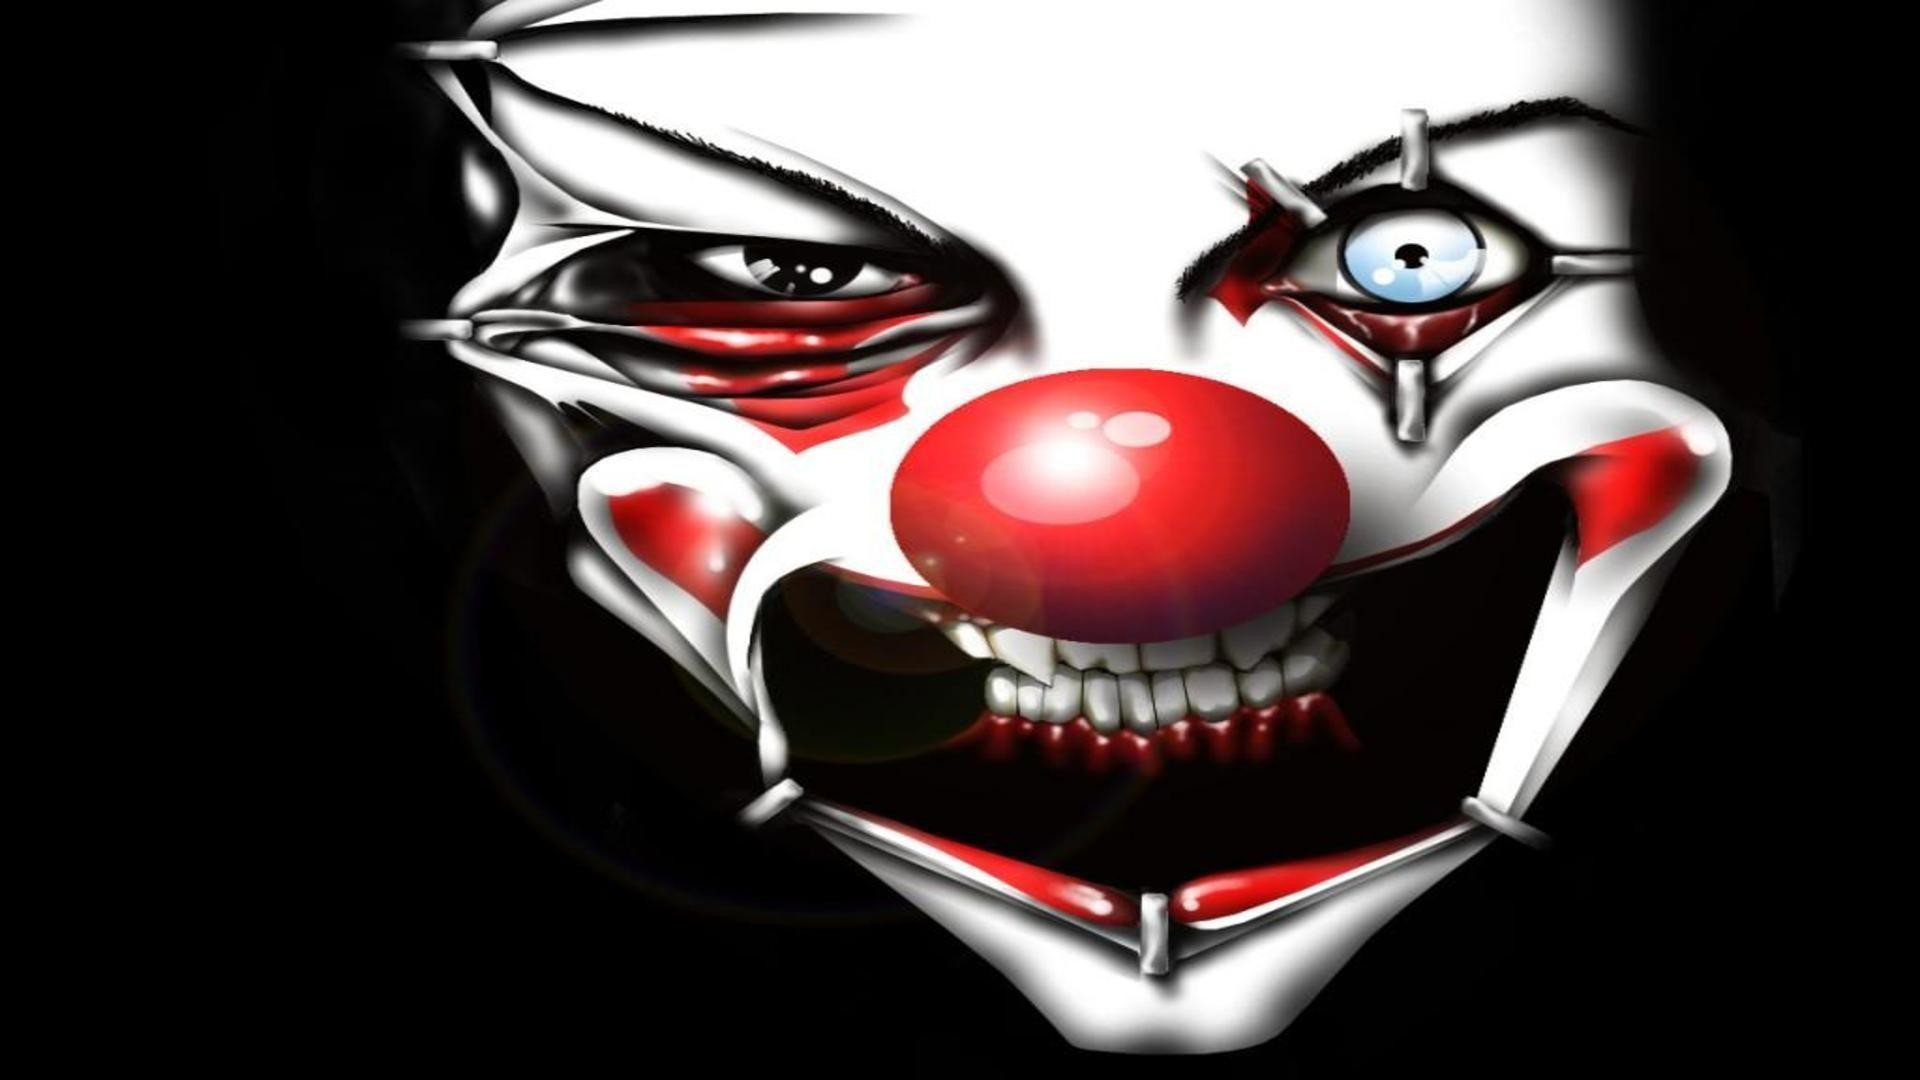 1920x1080 Evil clown face free desktop background - free wallpaper image